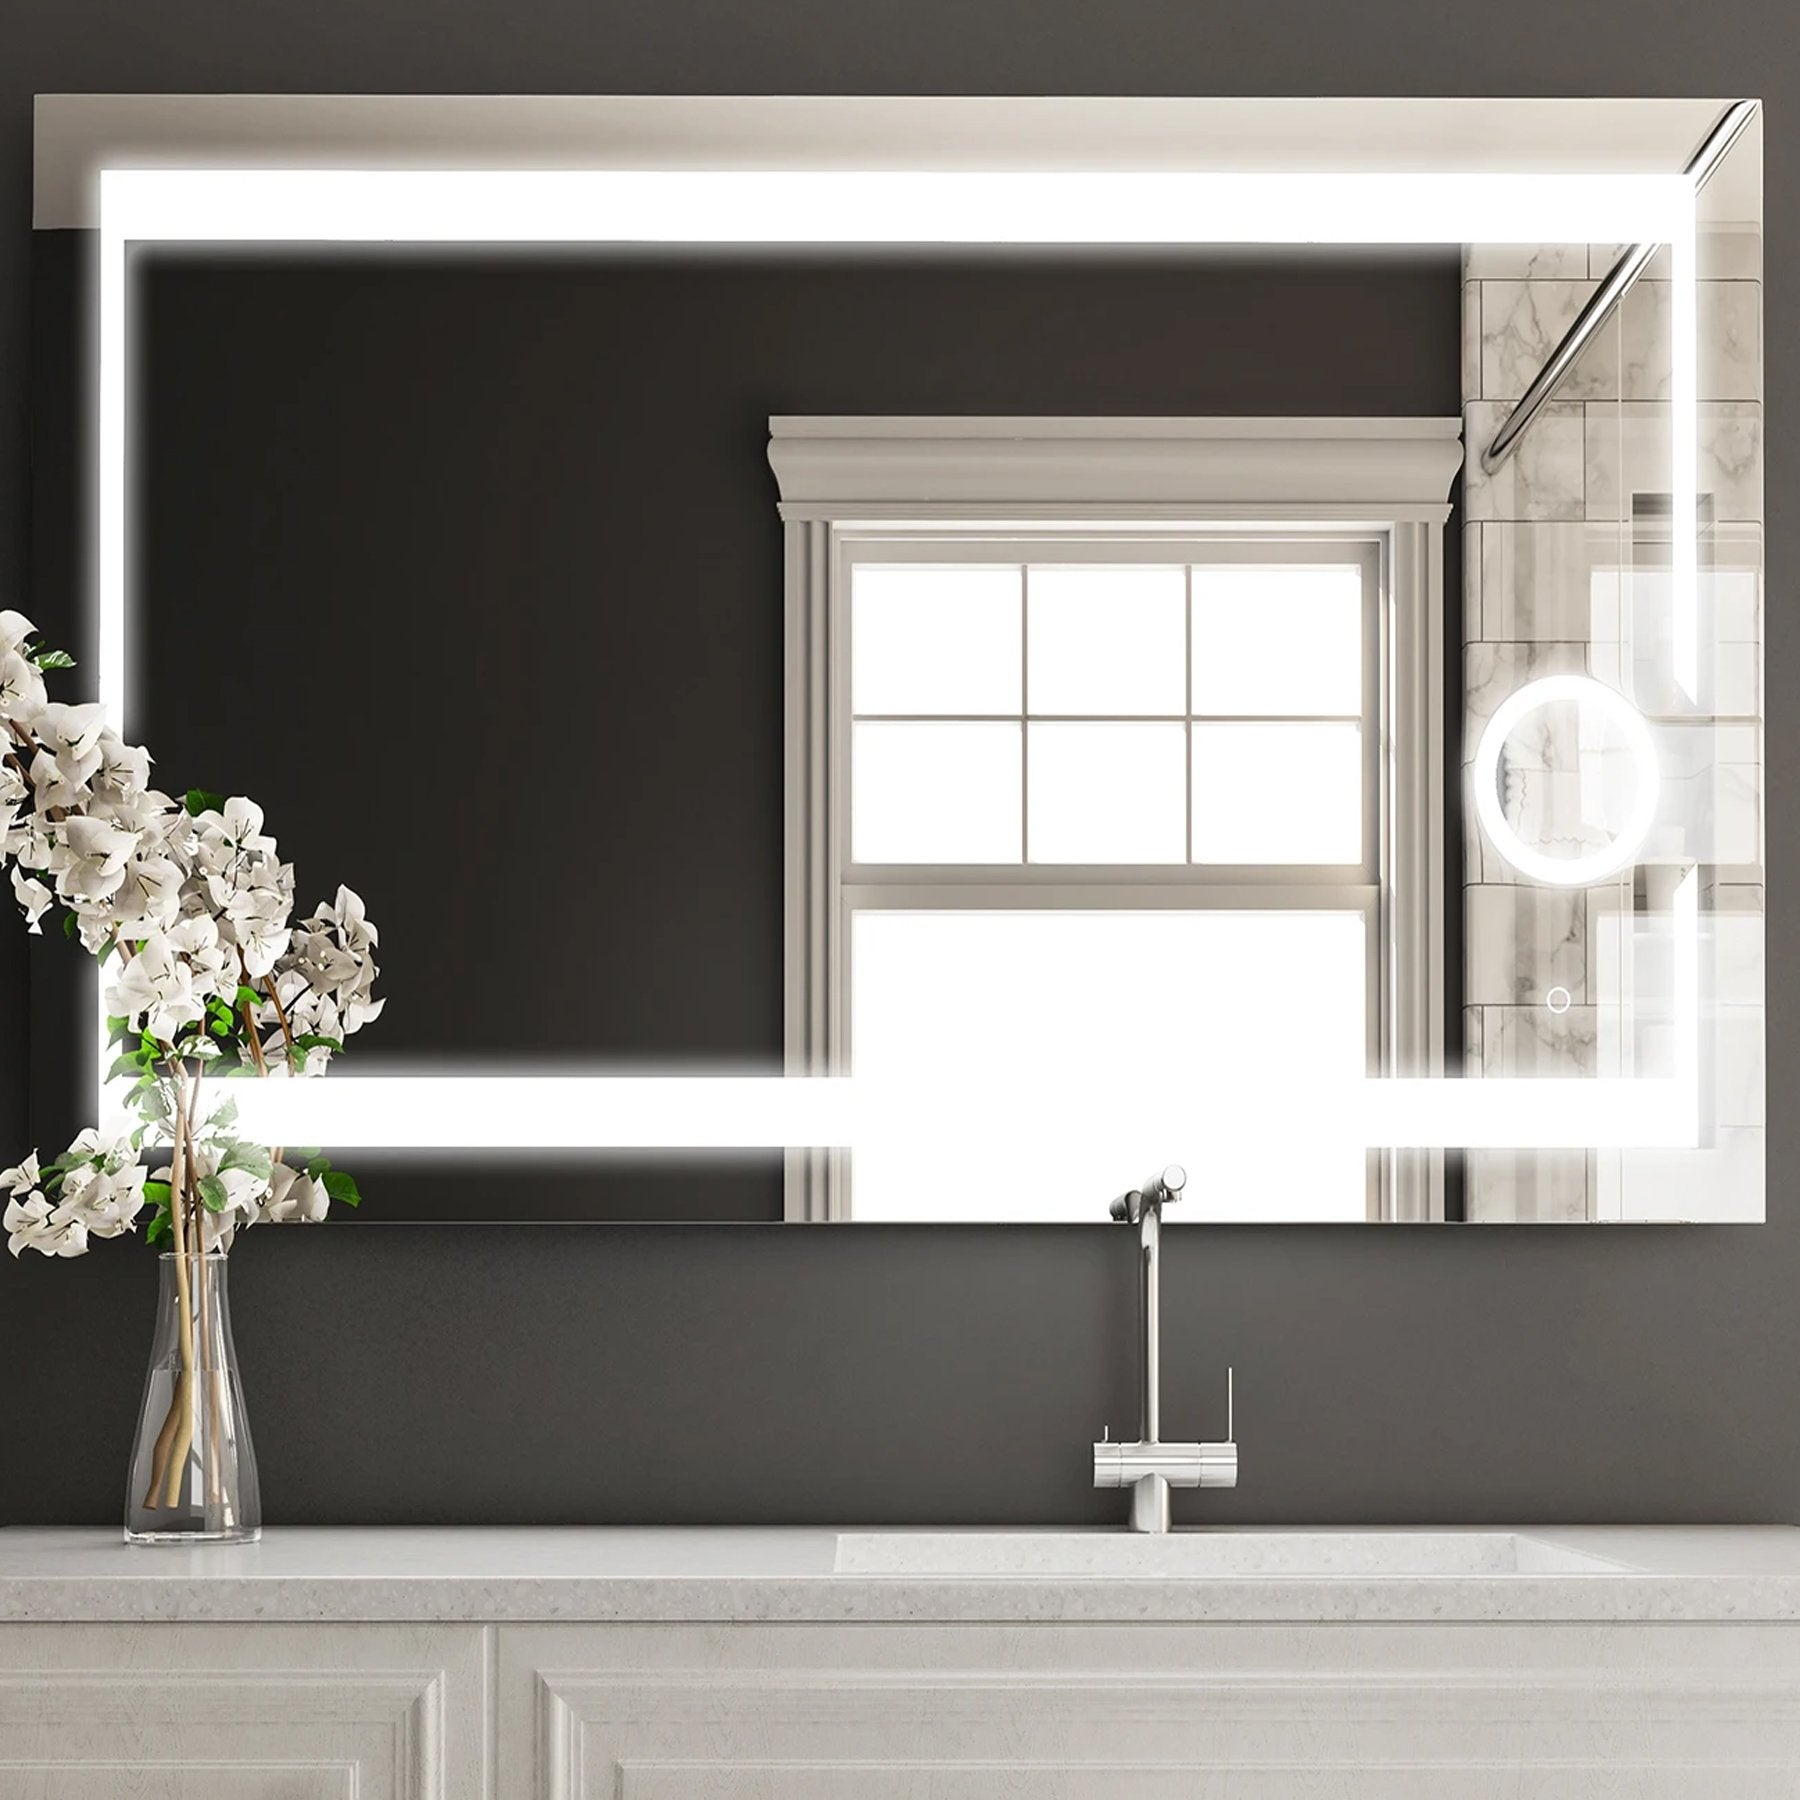 Beyond LED Technology LED Bathroom Lighted Mirror